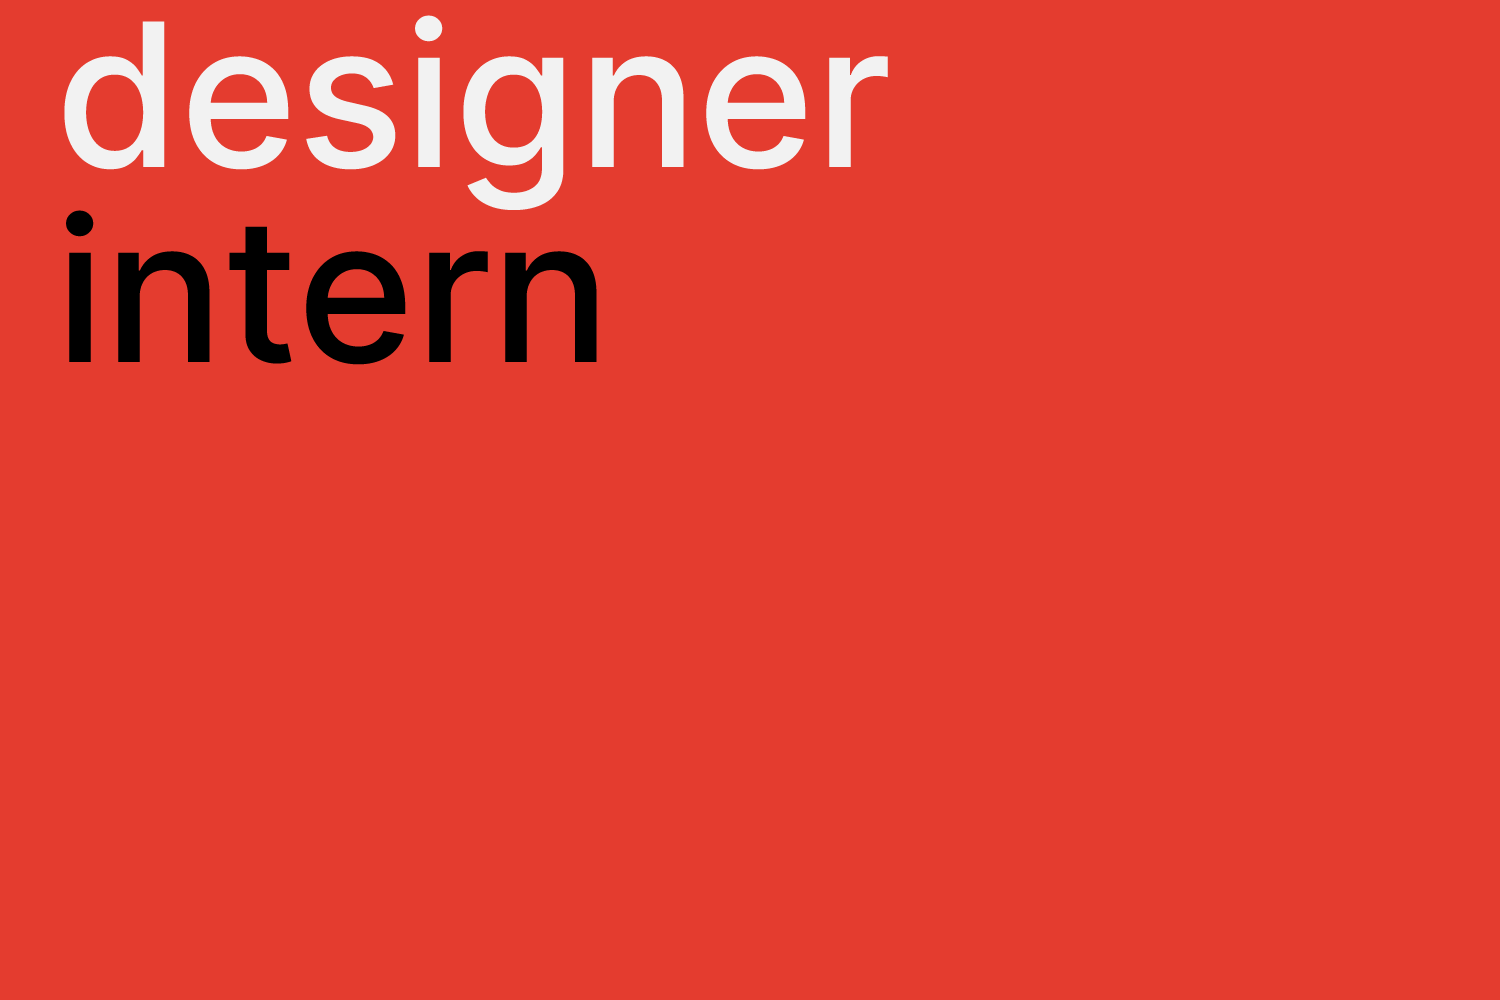 Brand Designer Intern thumbnail